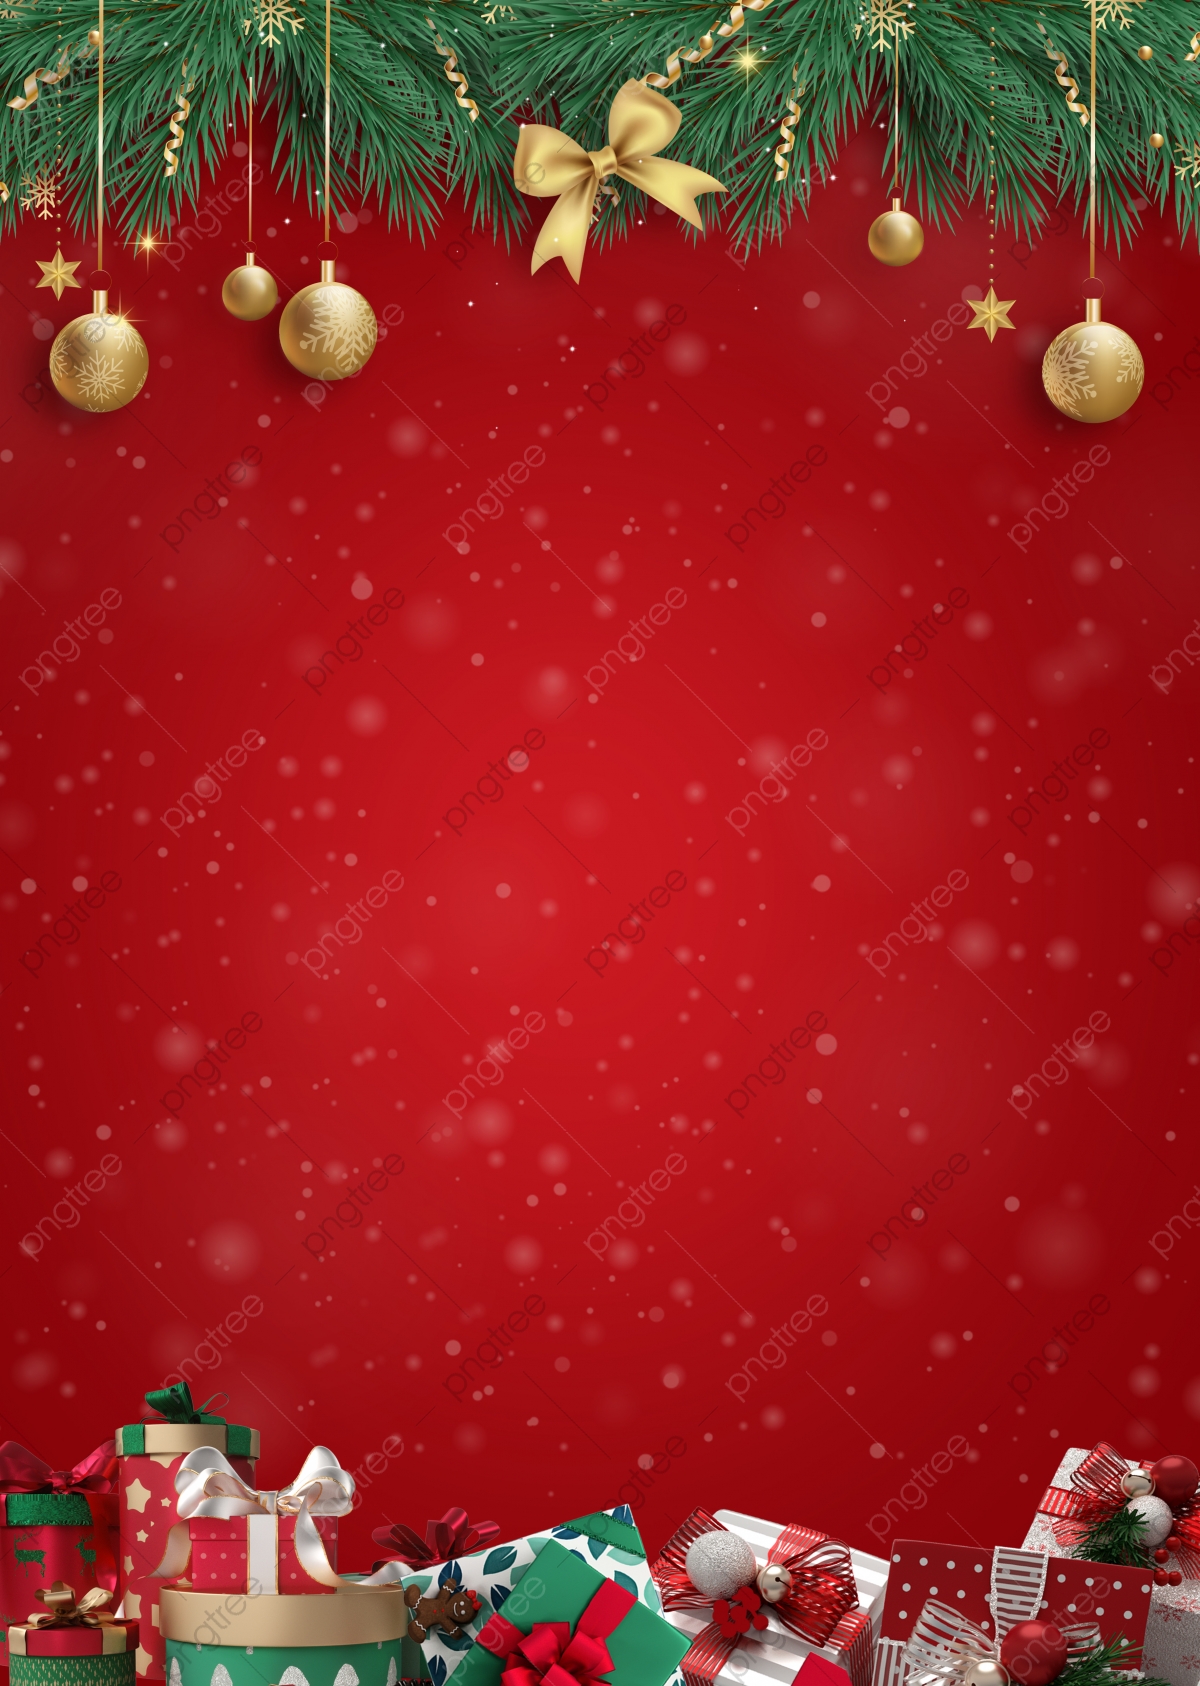 Christmas Backgrounds